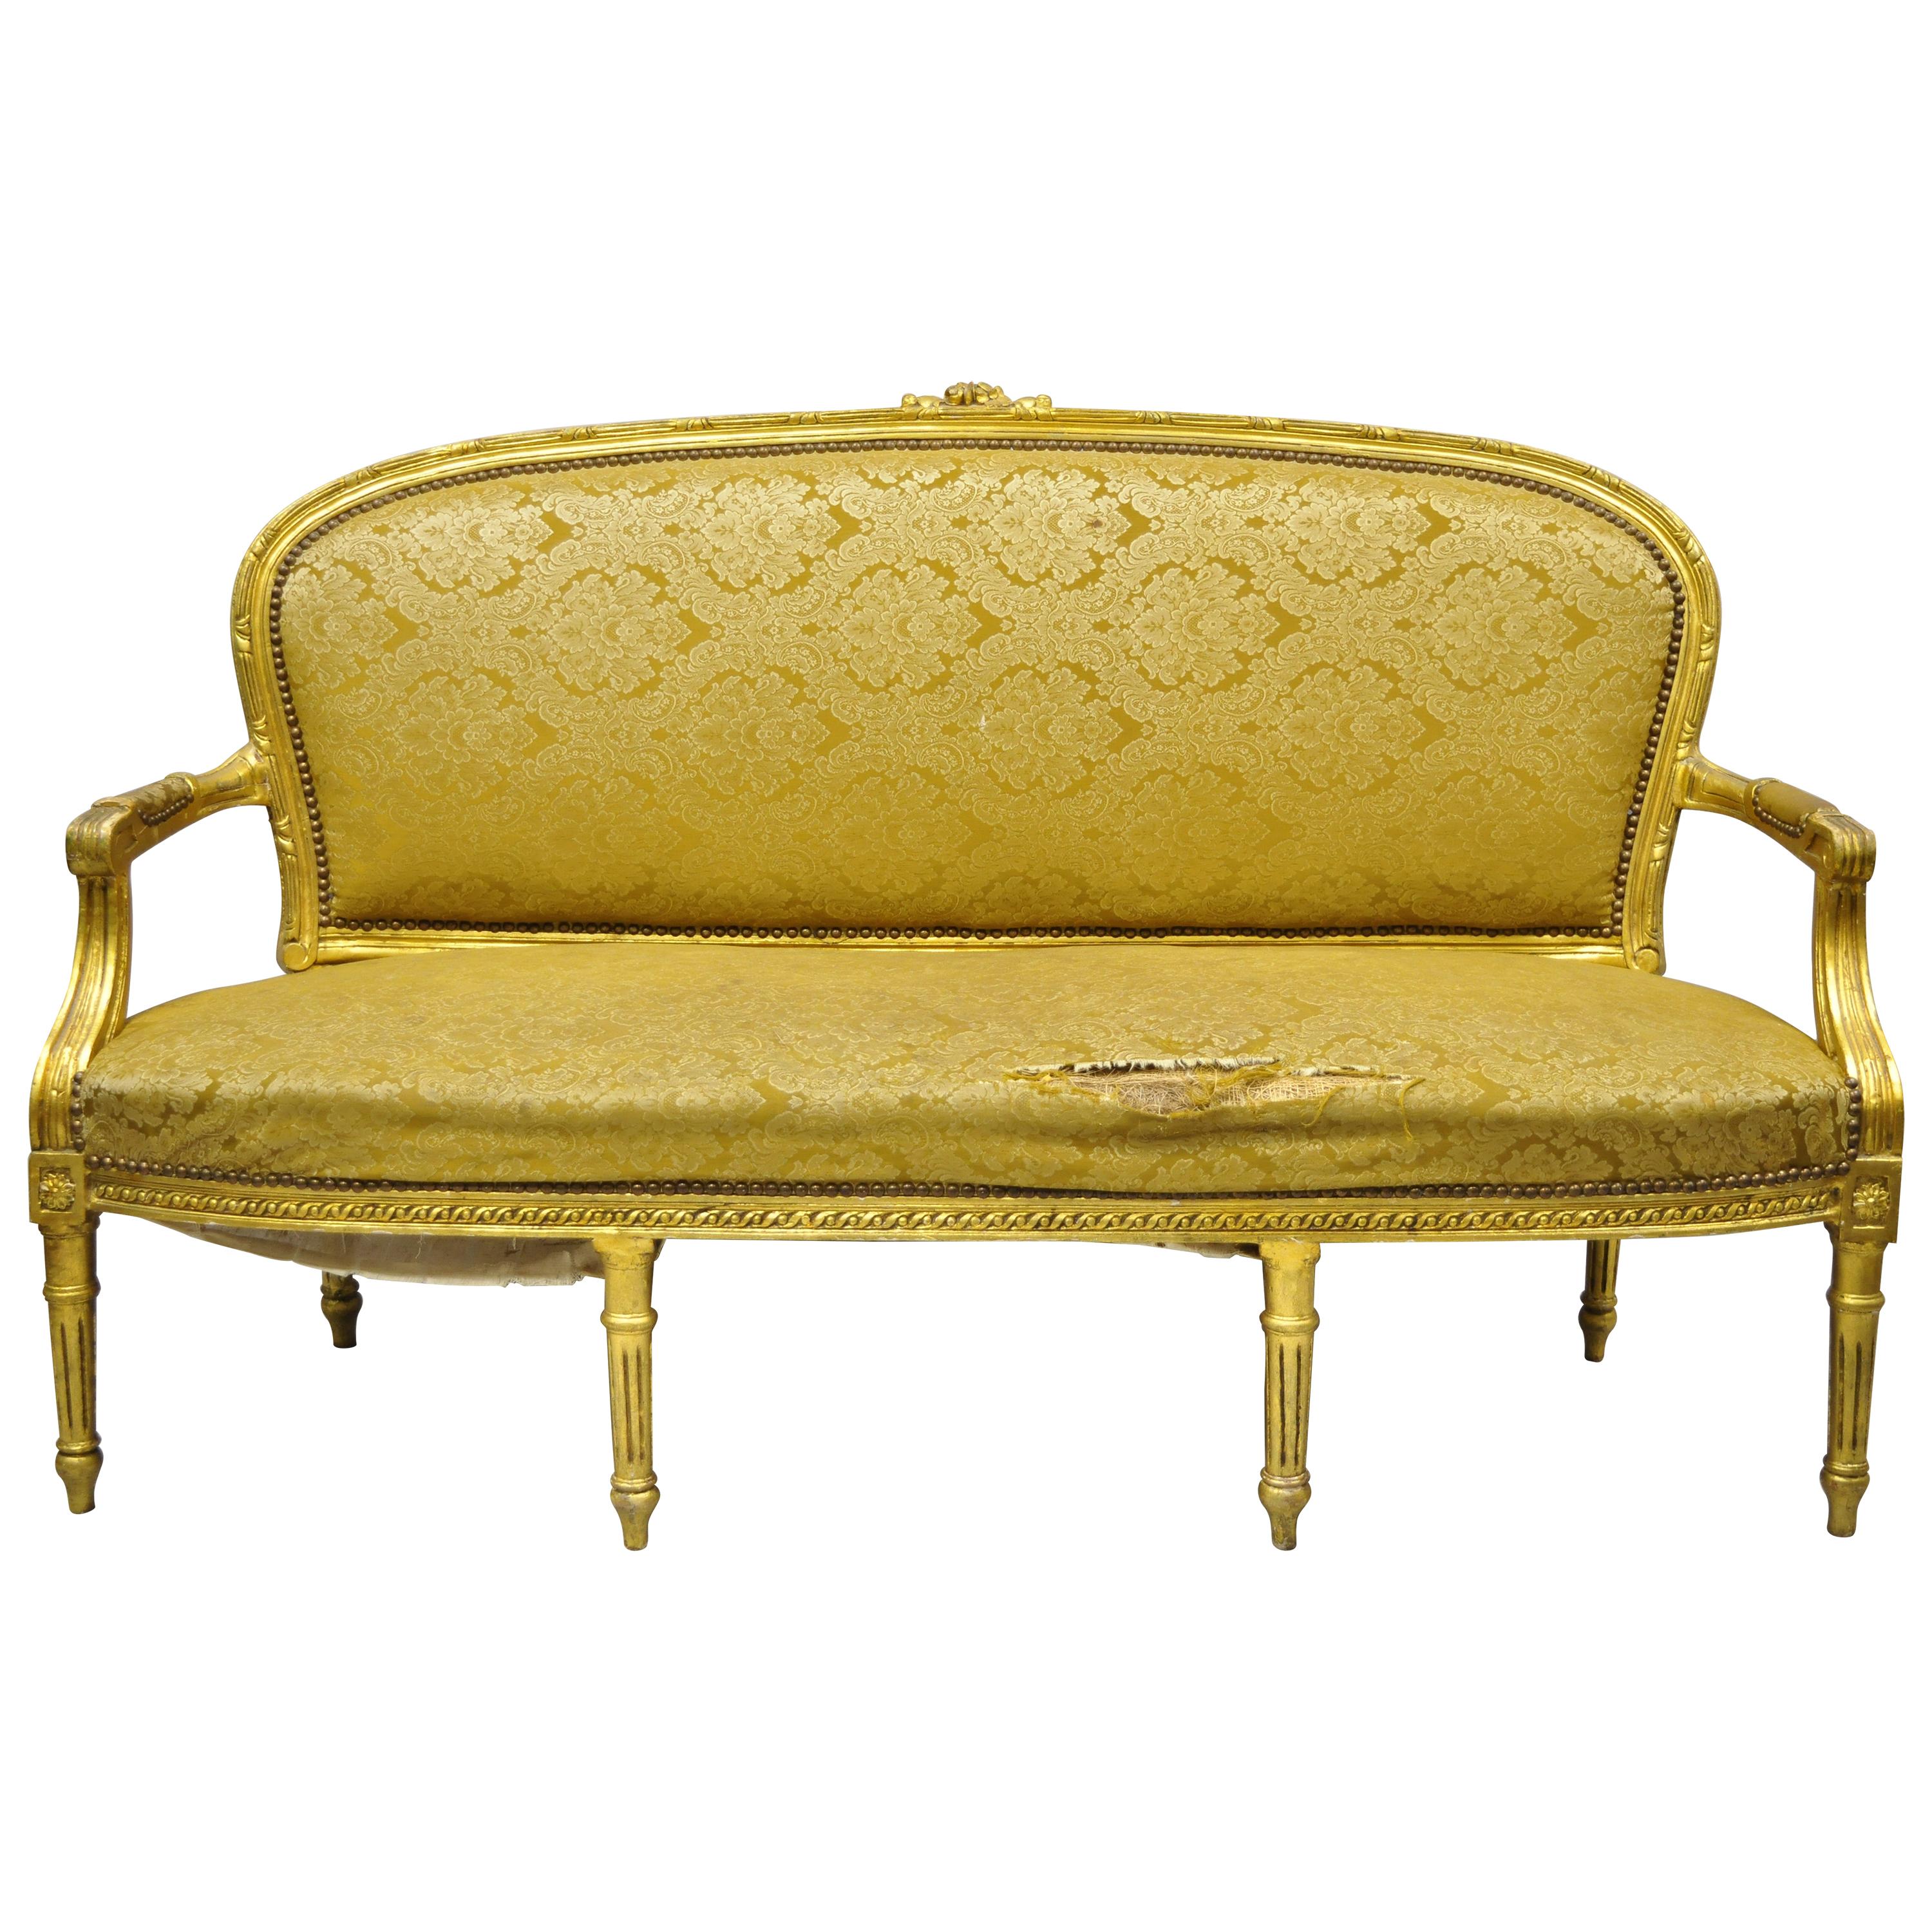 Vintage French Louis XVI Style Gold Leaf 6-Leg Settee Loveseat Sofa